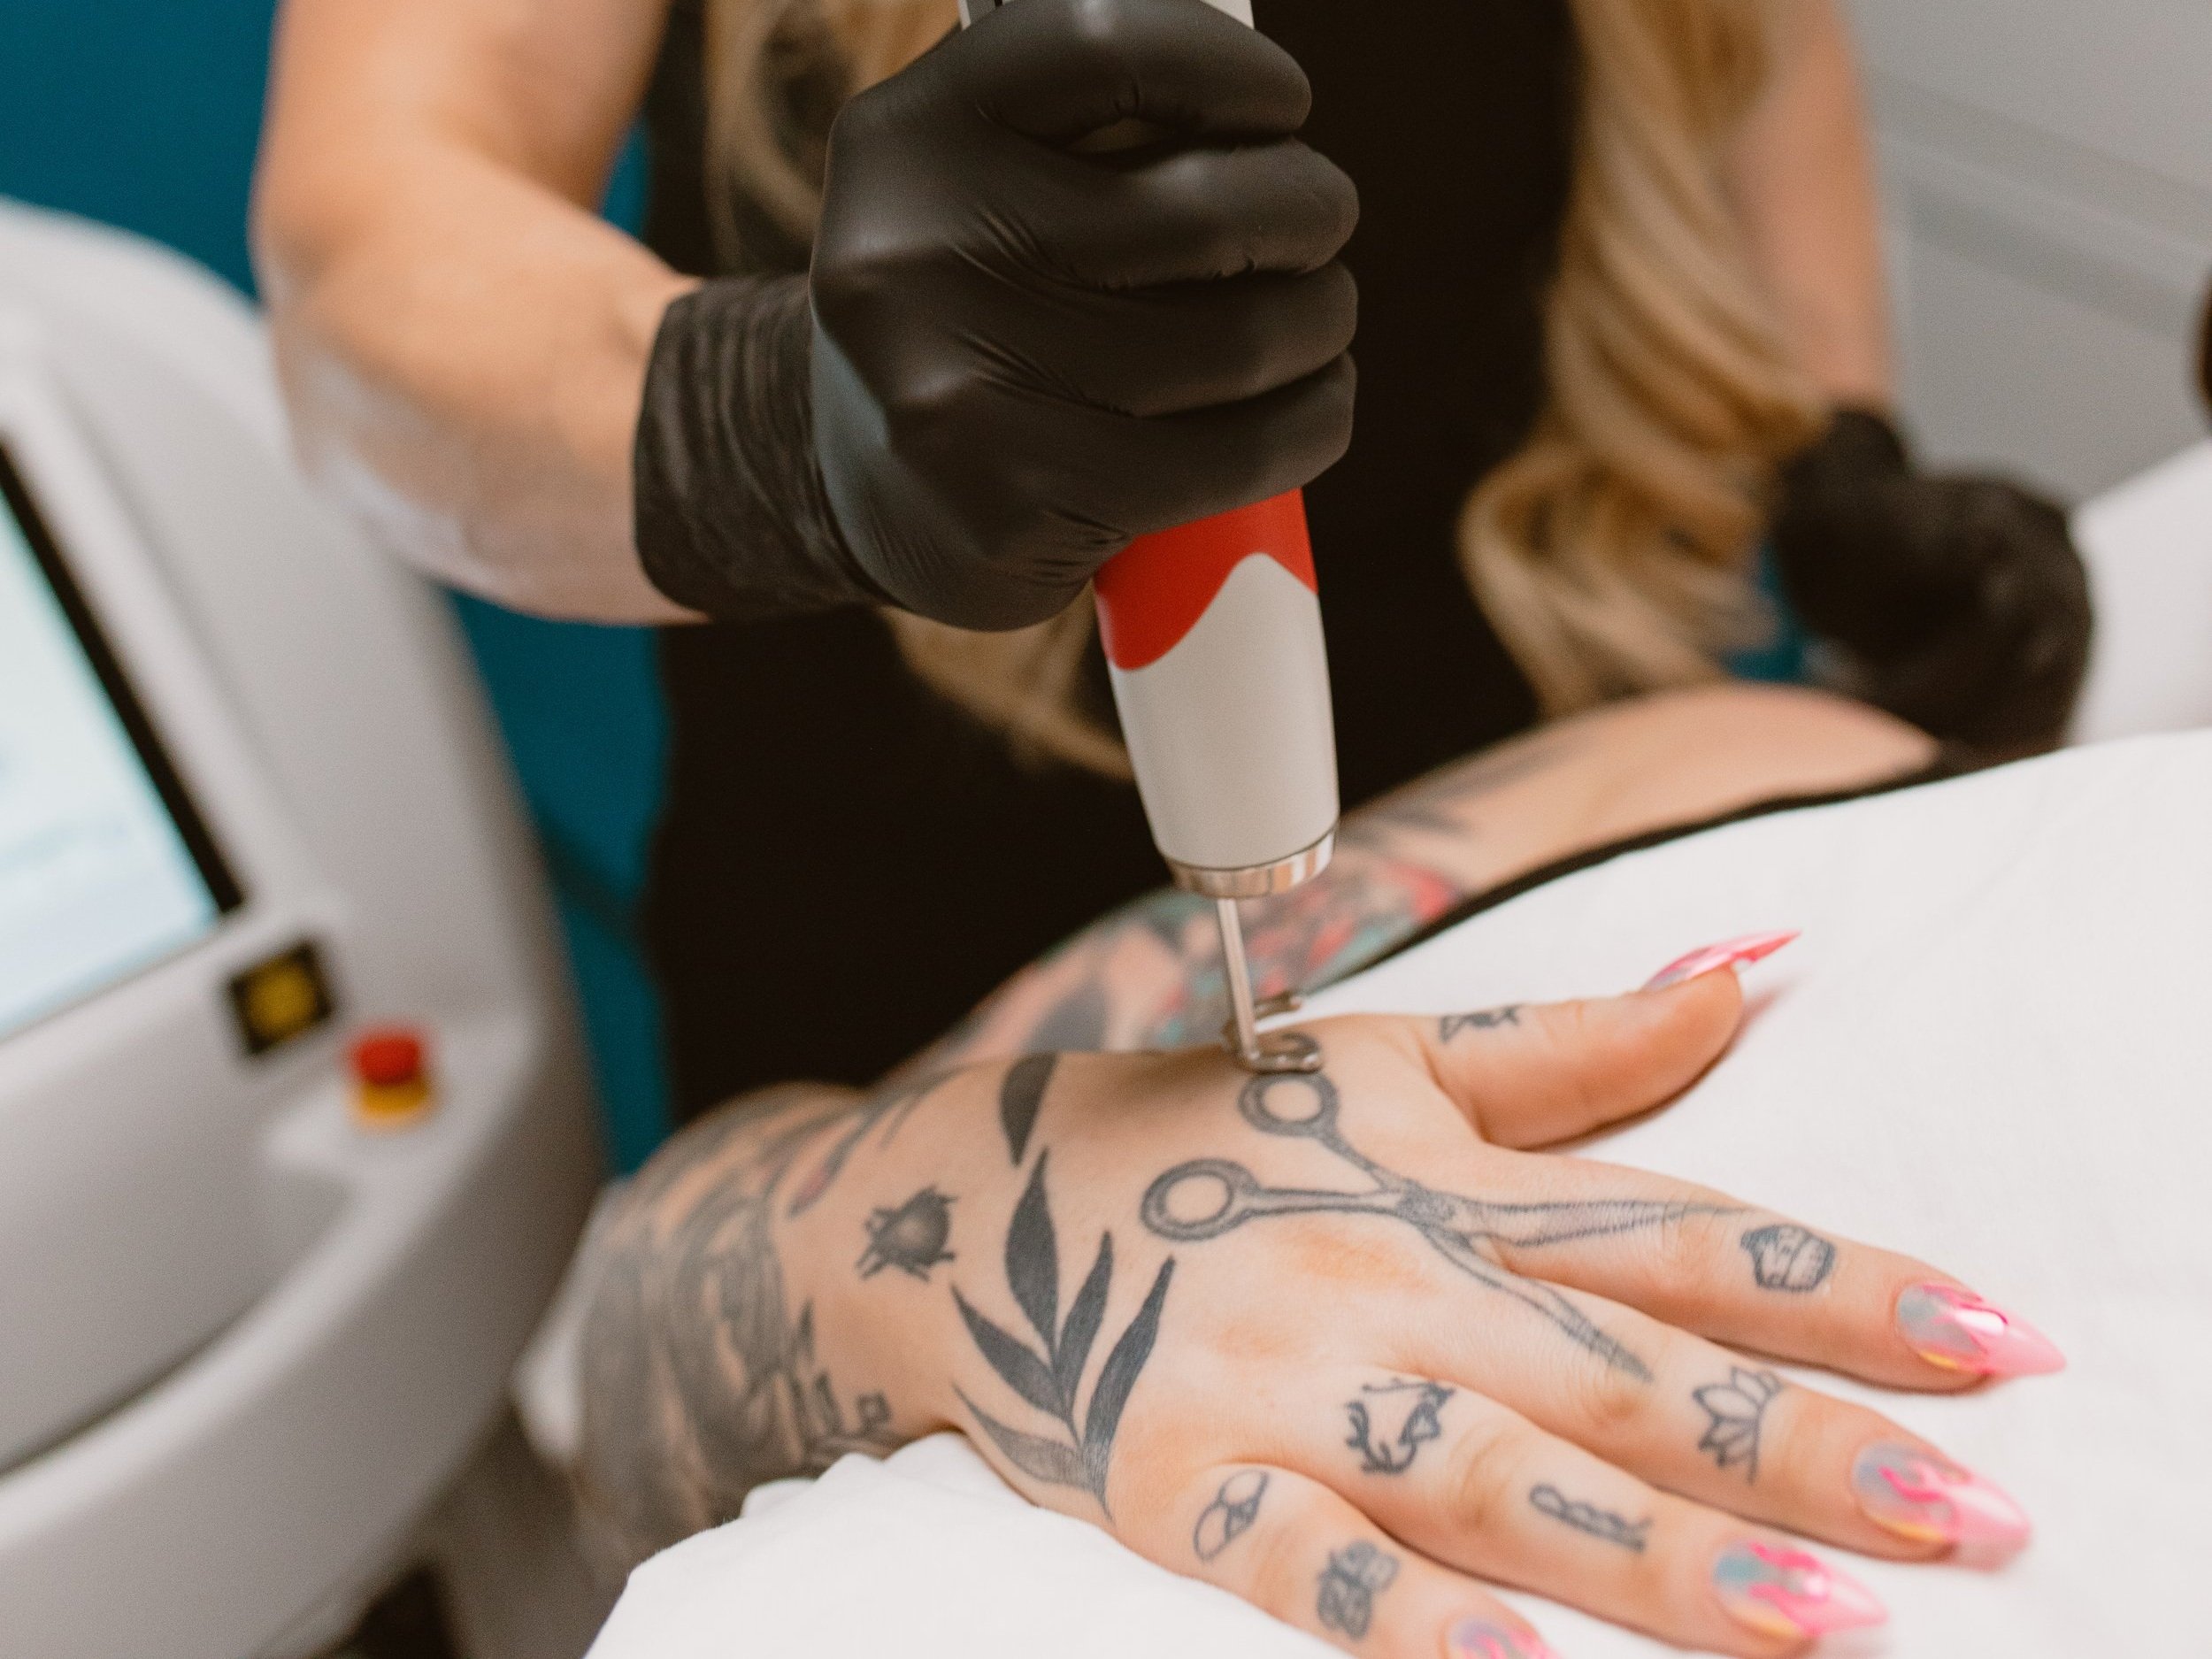 Jobseeker Mark Cropp's 'Devast8' tattoo getting lasered off - NZ Herald